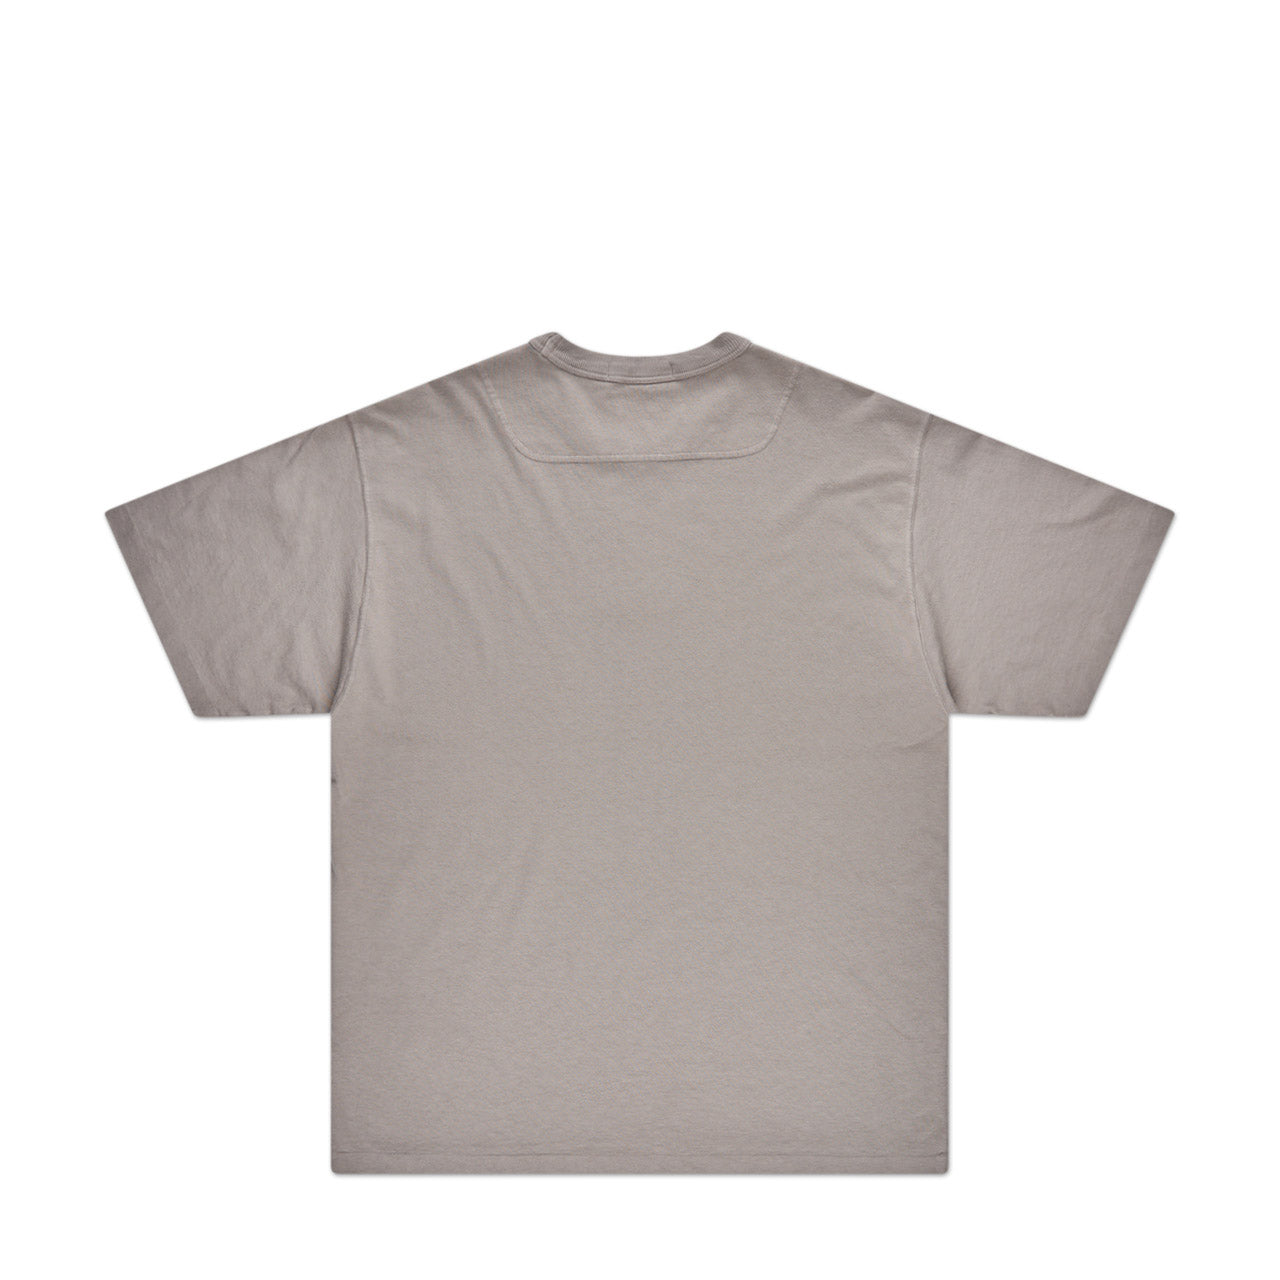 stone island t-shirt (dove grey)